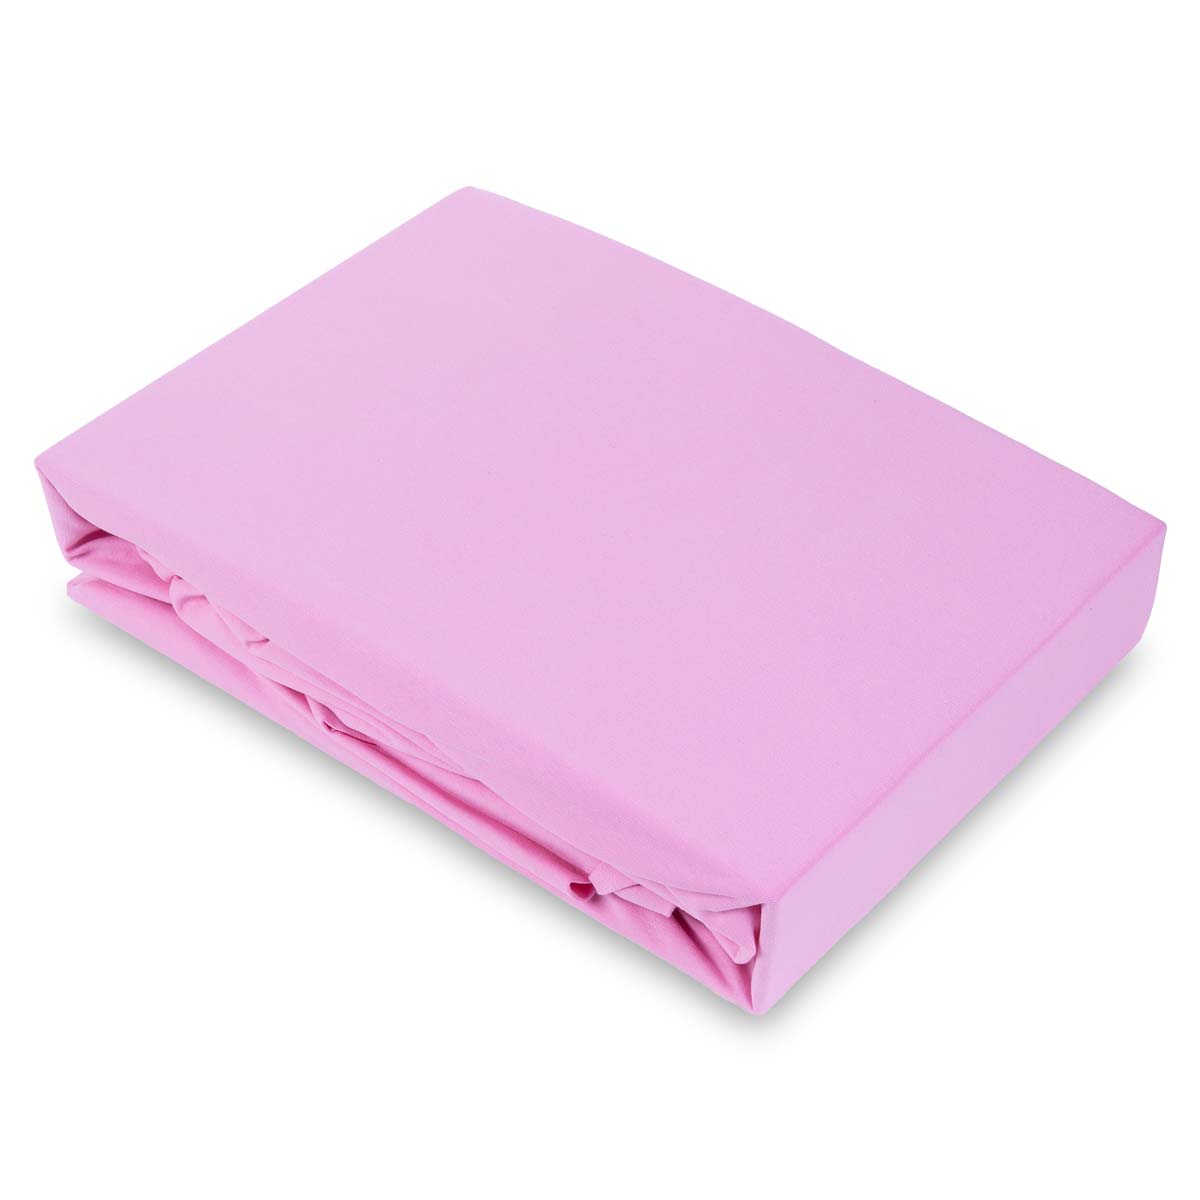 Простыня натяжная 1,5-спальная Pappel 160x220см, цвет розовый